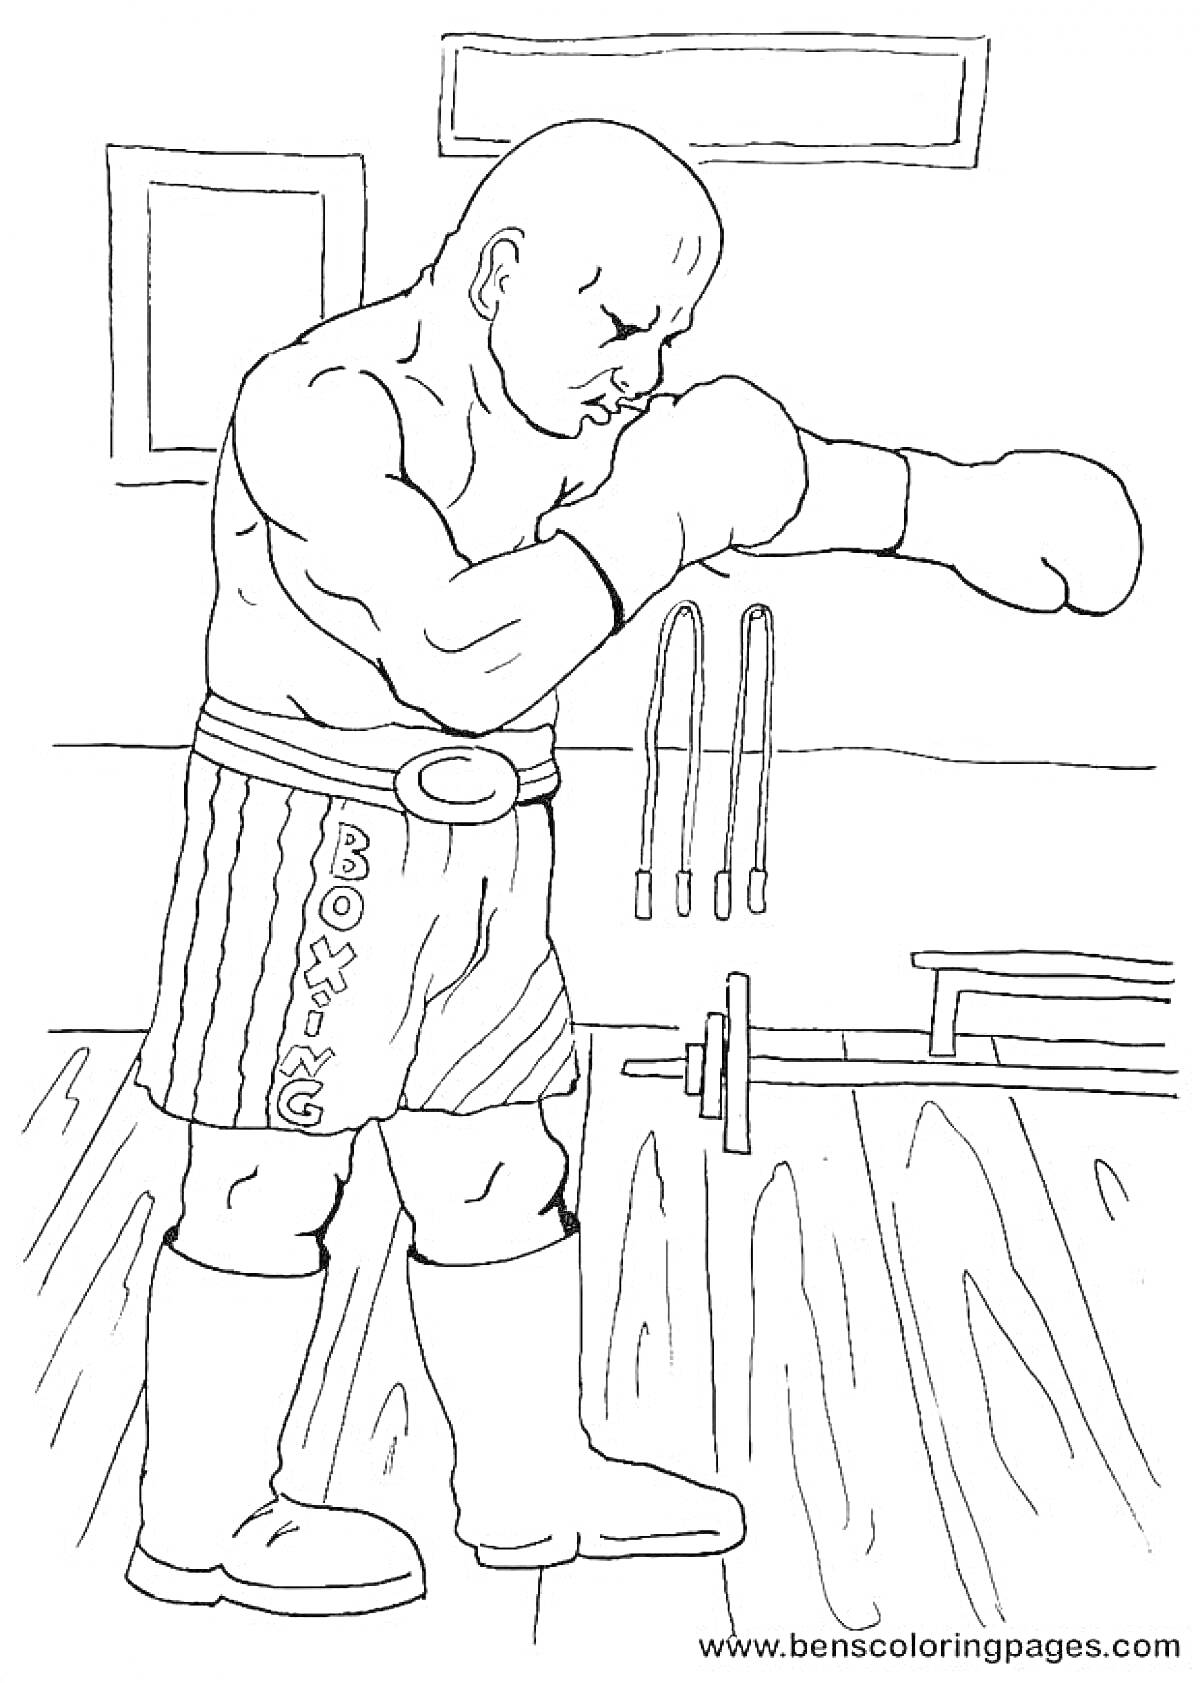 Боксёр с гантелями в спортивном зале